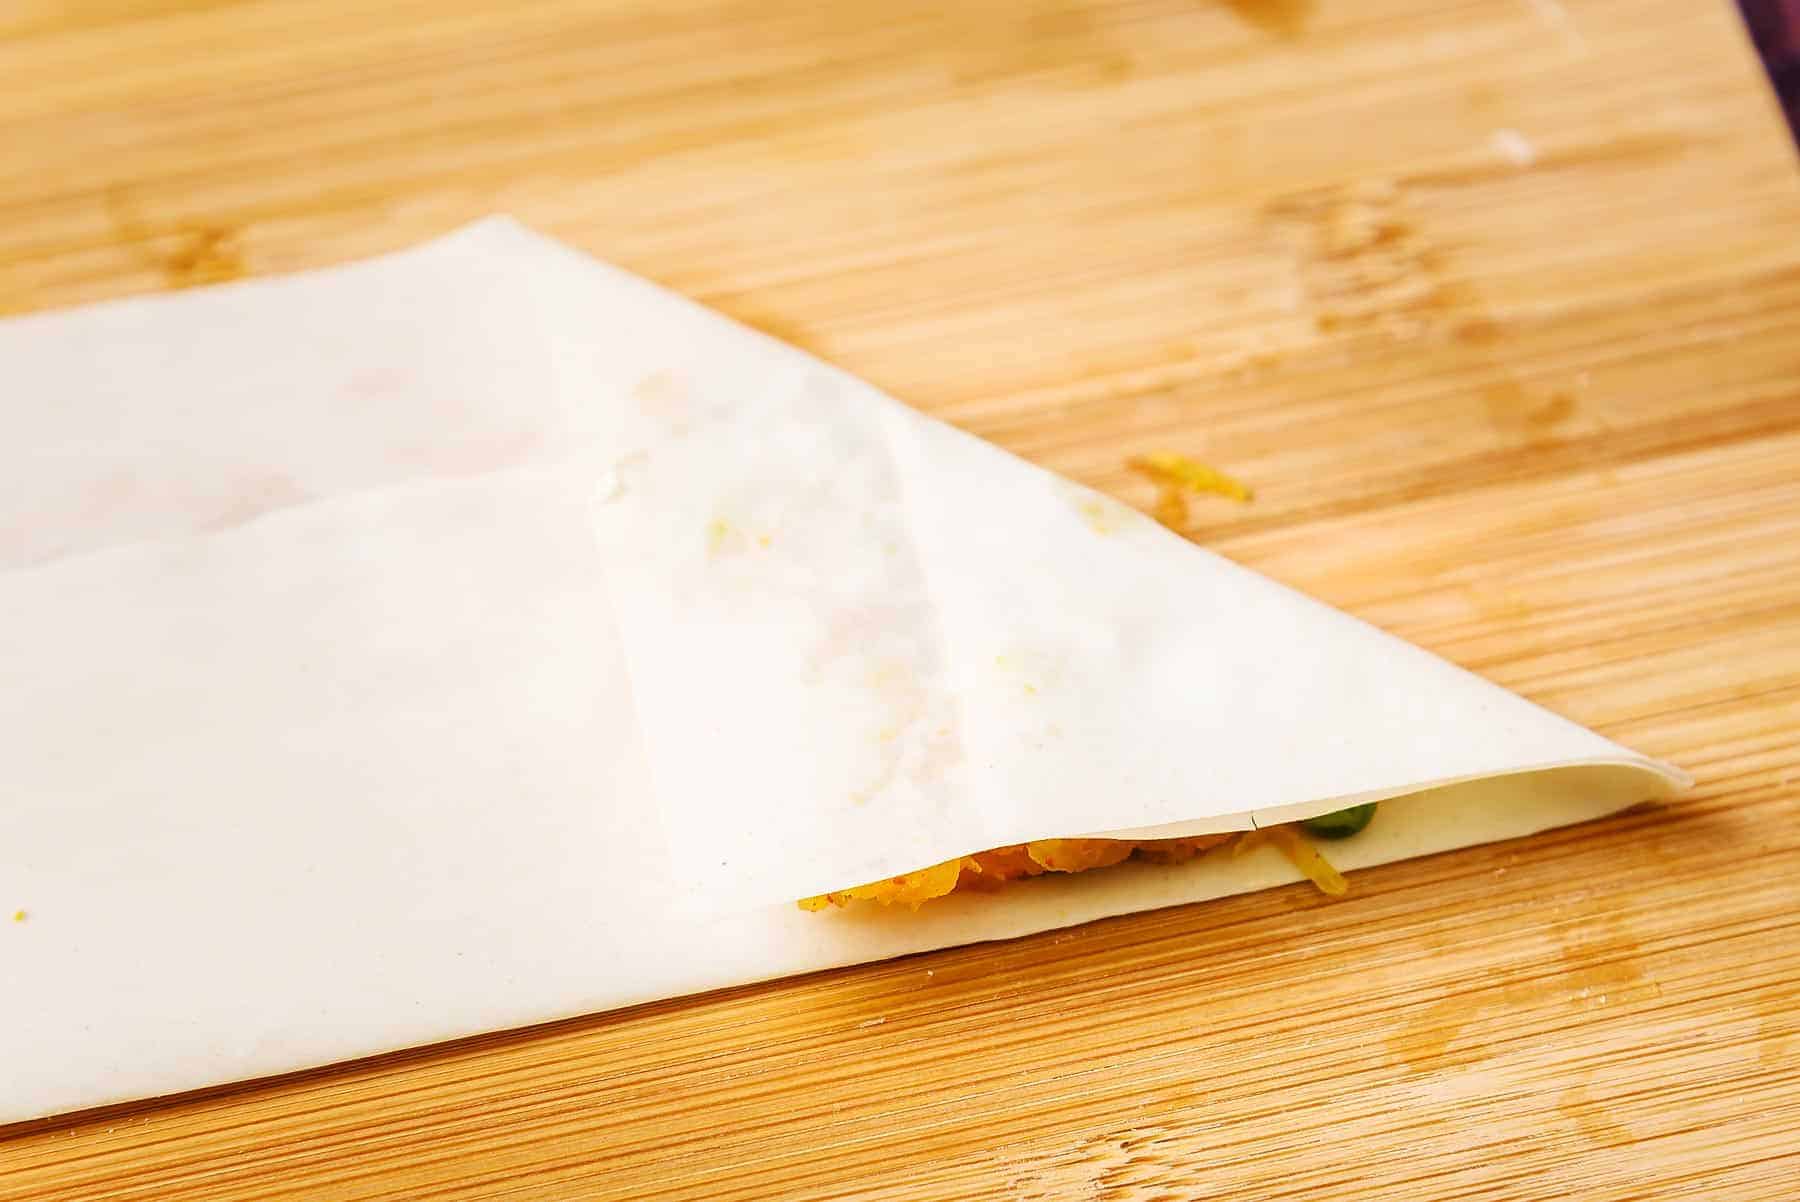 Folding the samosa